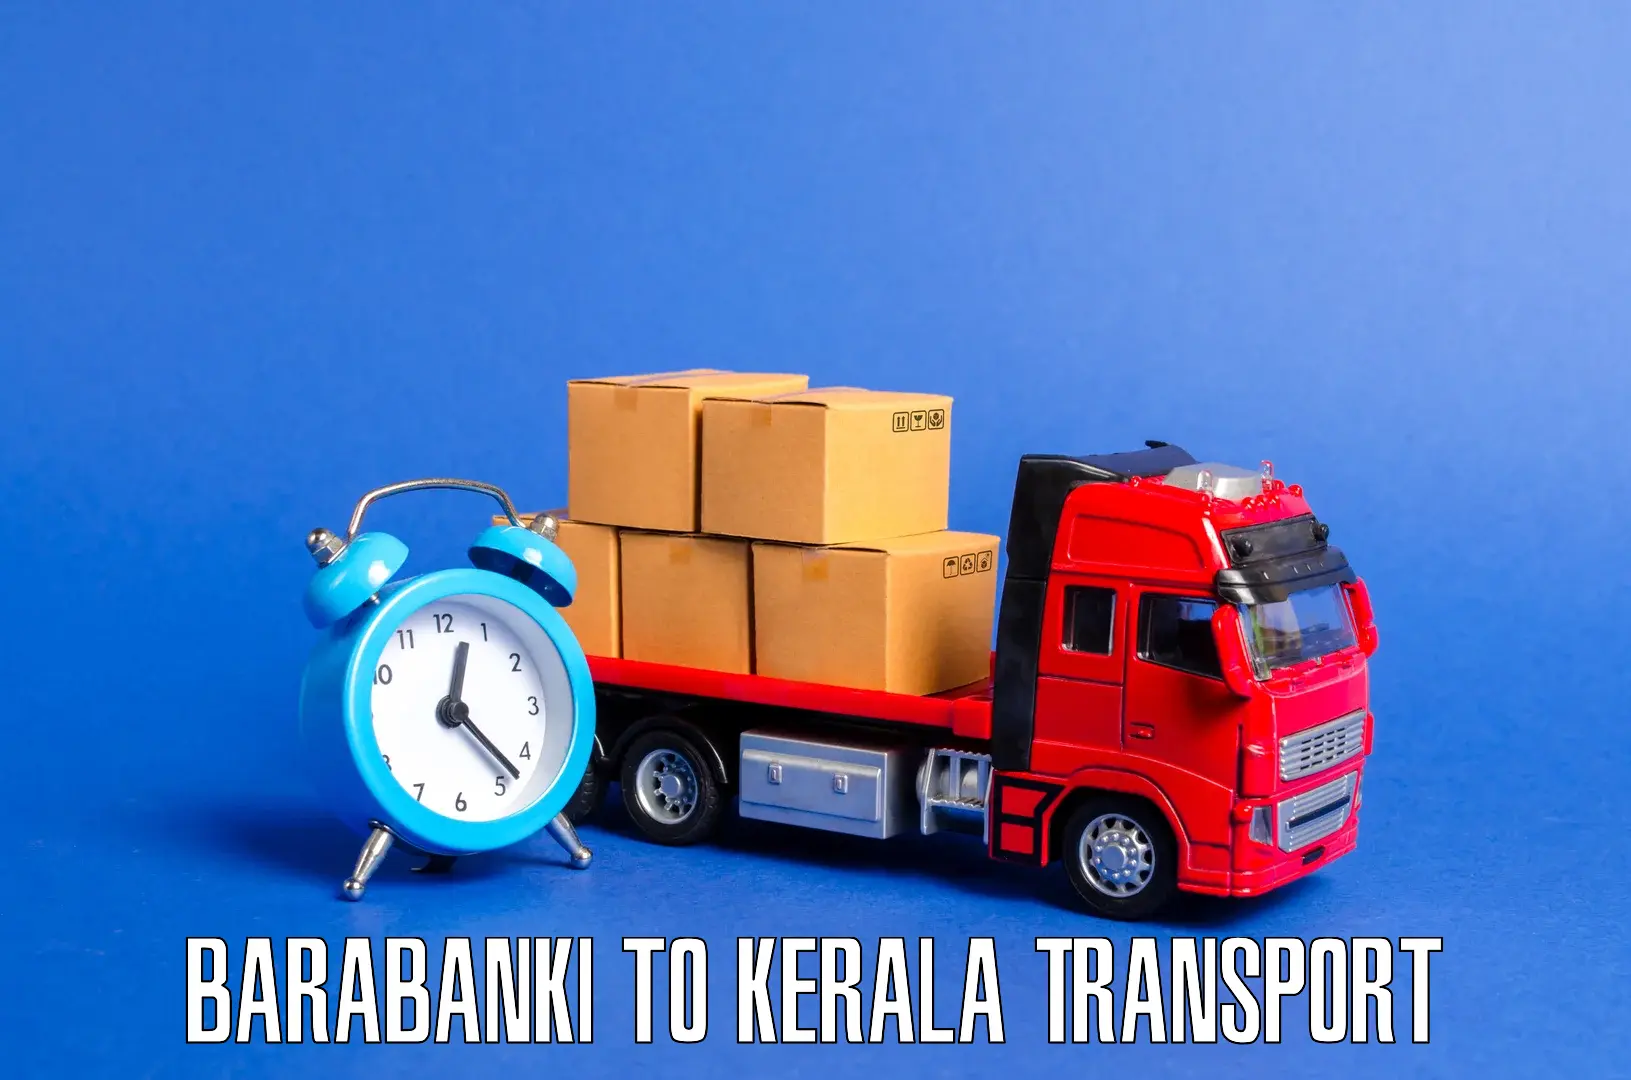 Nearby transport service Barabanki to Kazhakkoottam